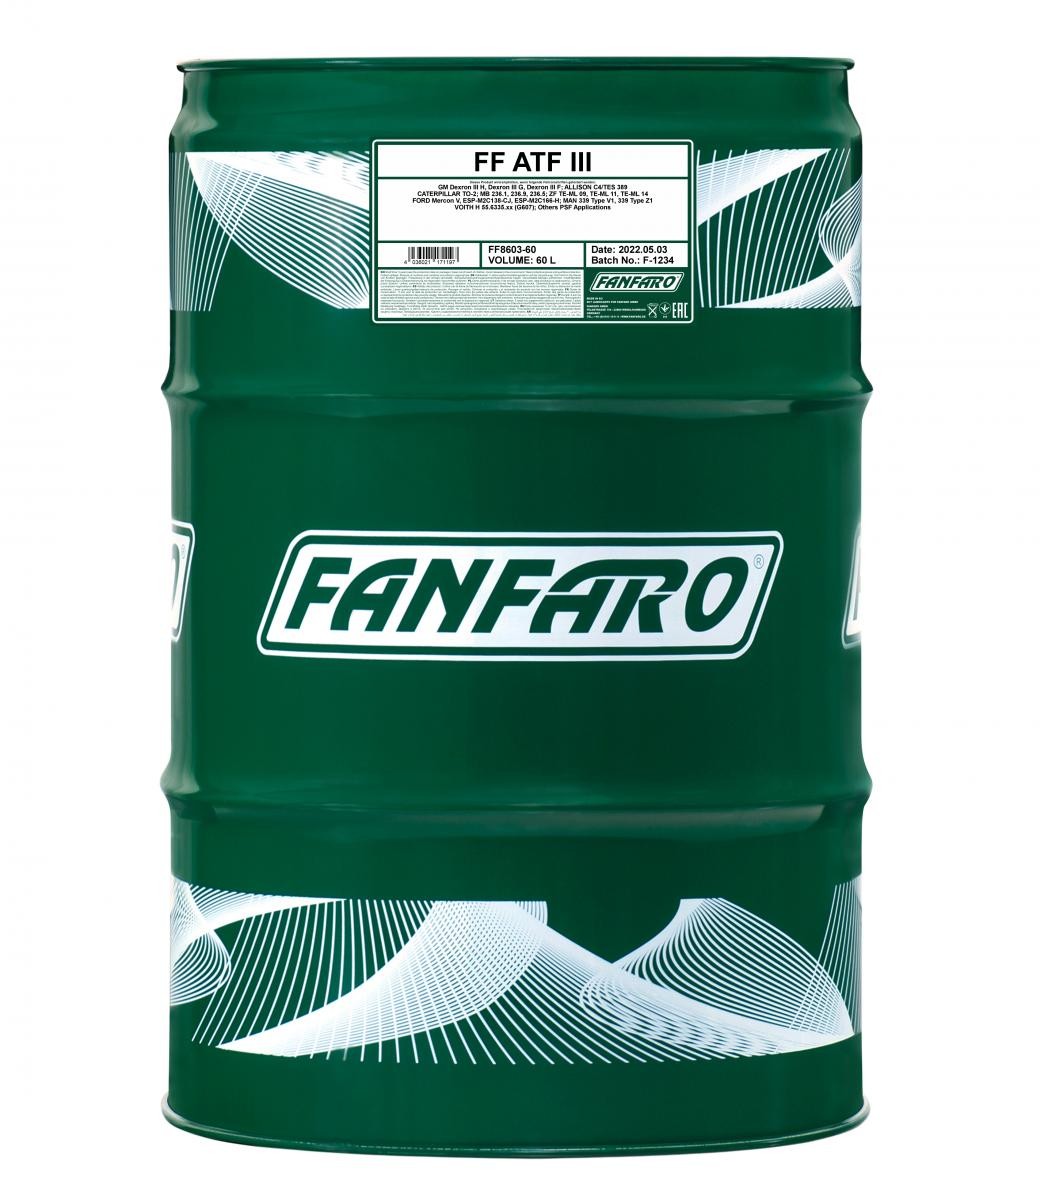 FF8603-60 FANFARO Automatikgetriebeöl DAF 75 CF